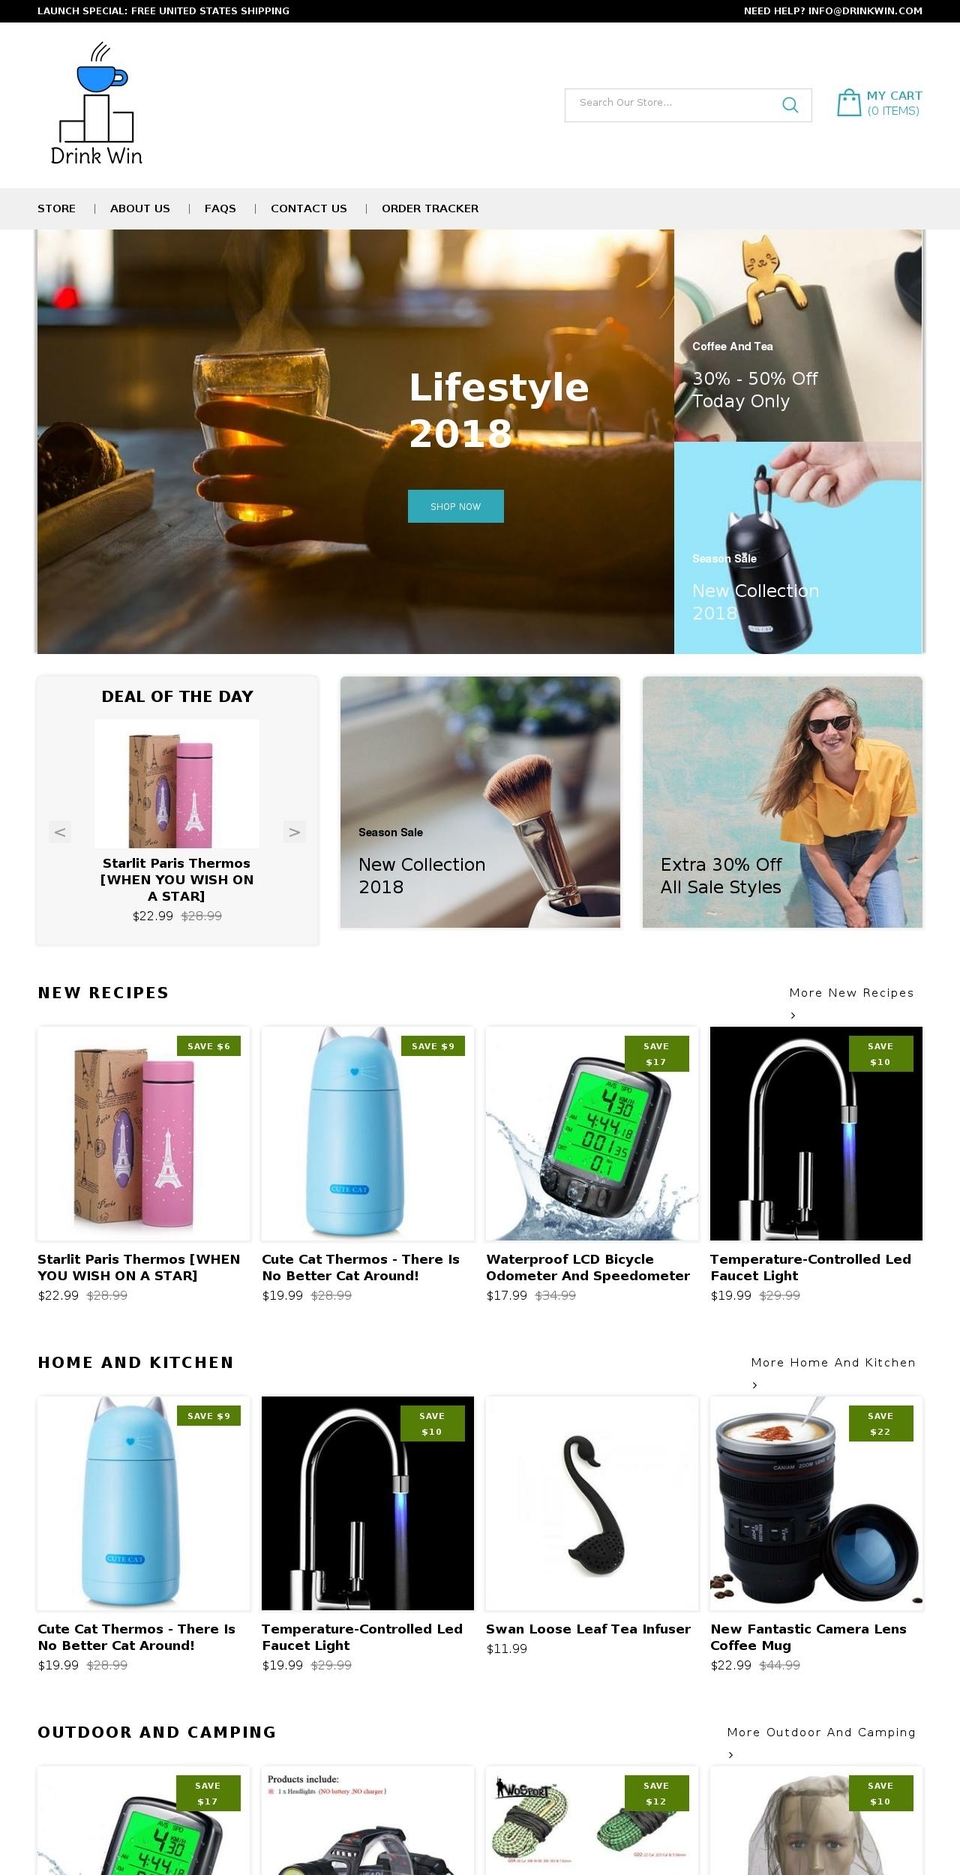 drinkwin.com shopify website screenshot